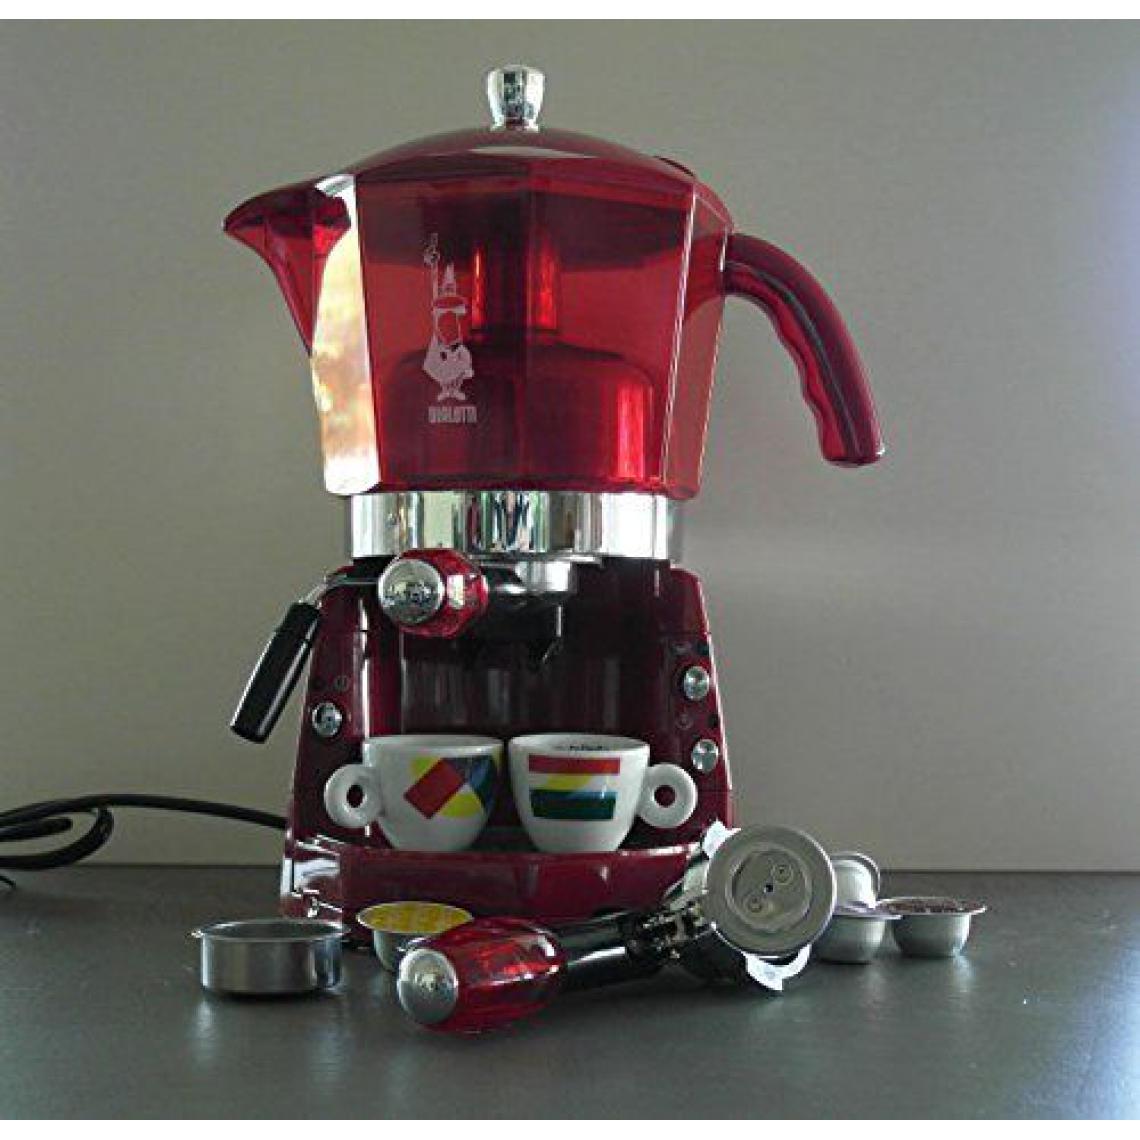 Girmi - Girmi Mokona Machine du Caffe, rouge transparent - Expresso - Cafetière